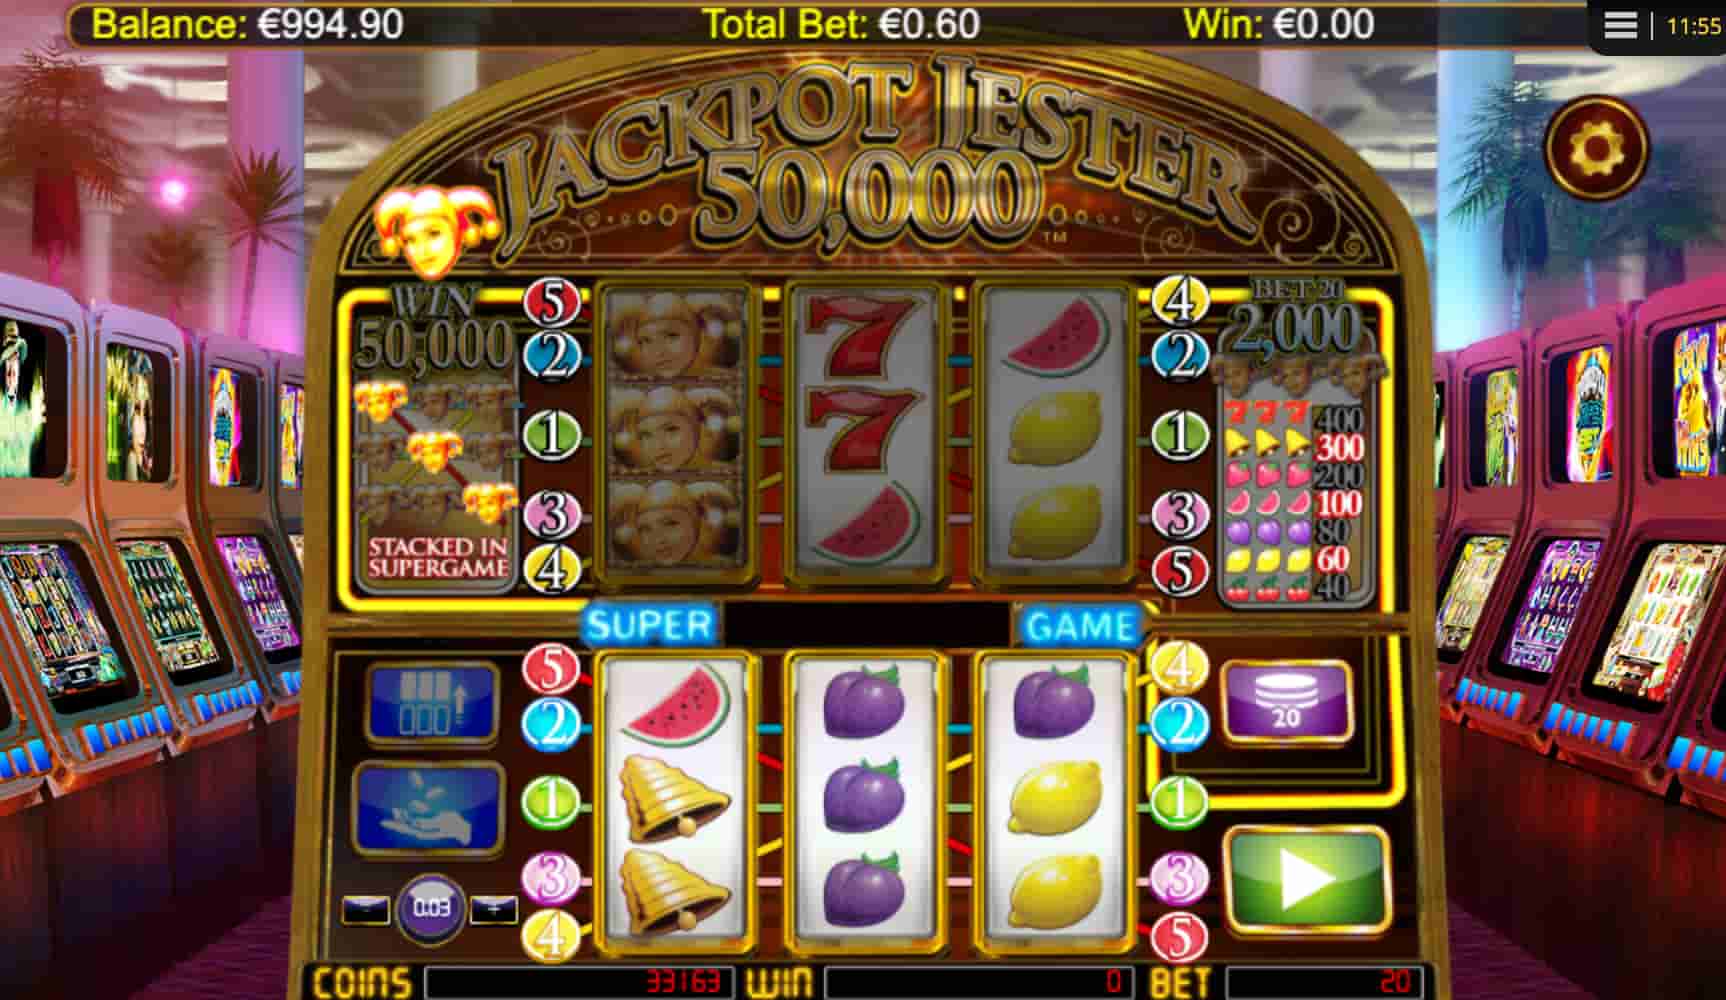 Jackpot Jester 50k screenshot 2